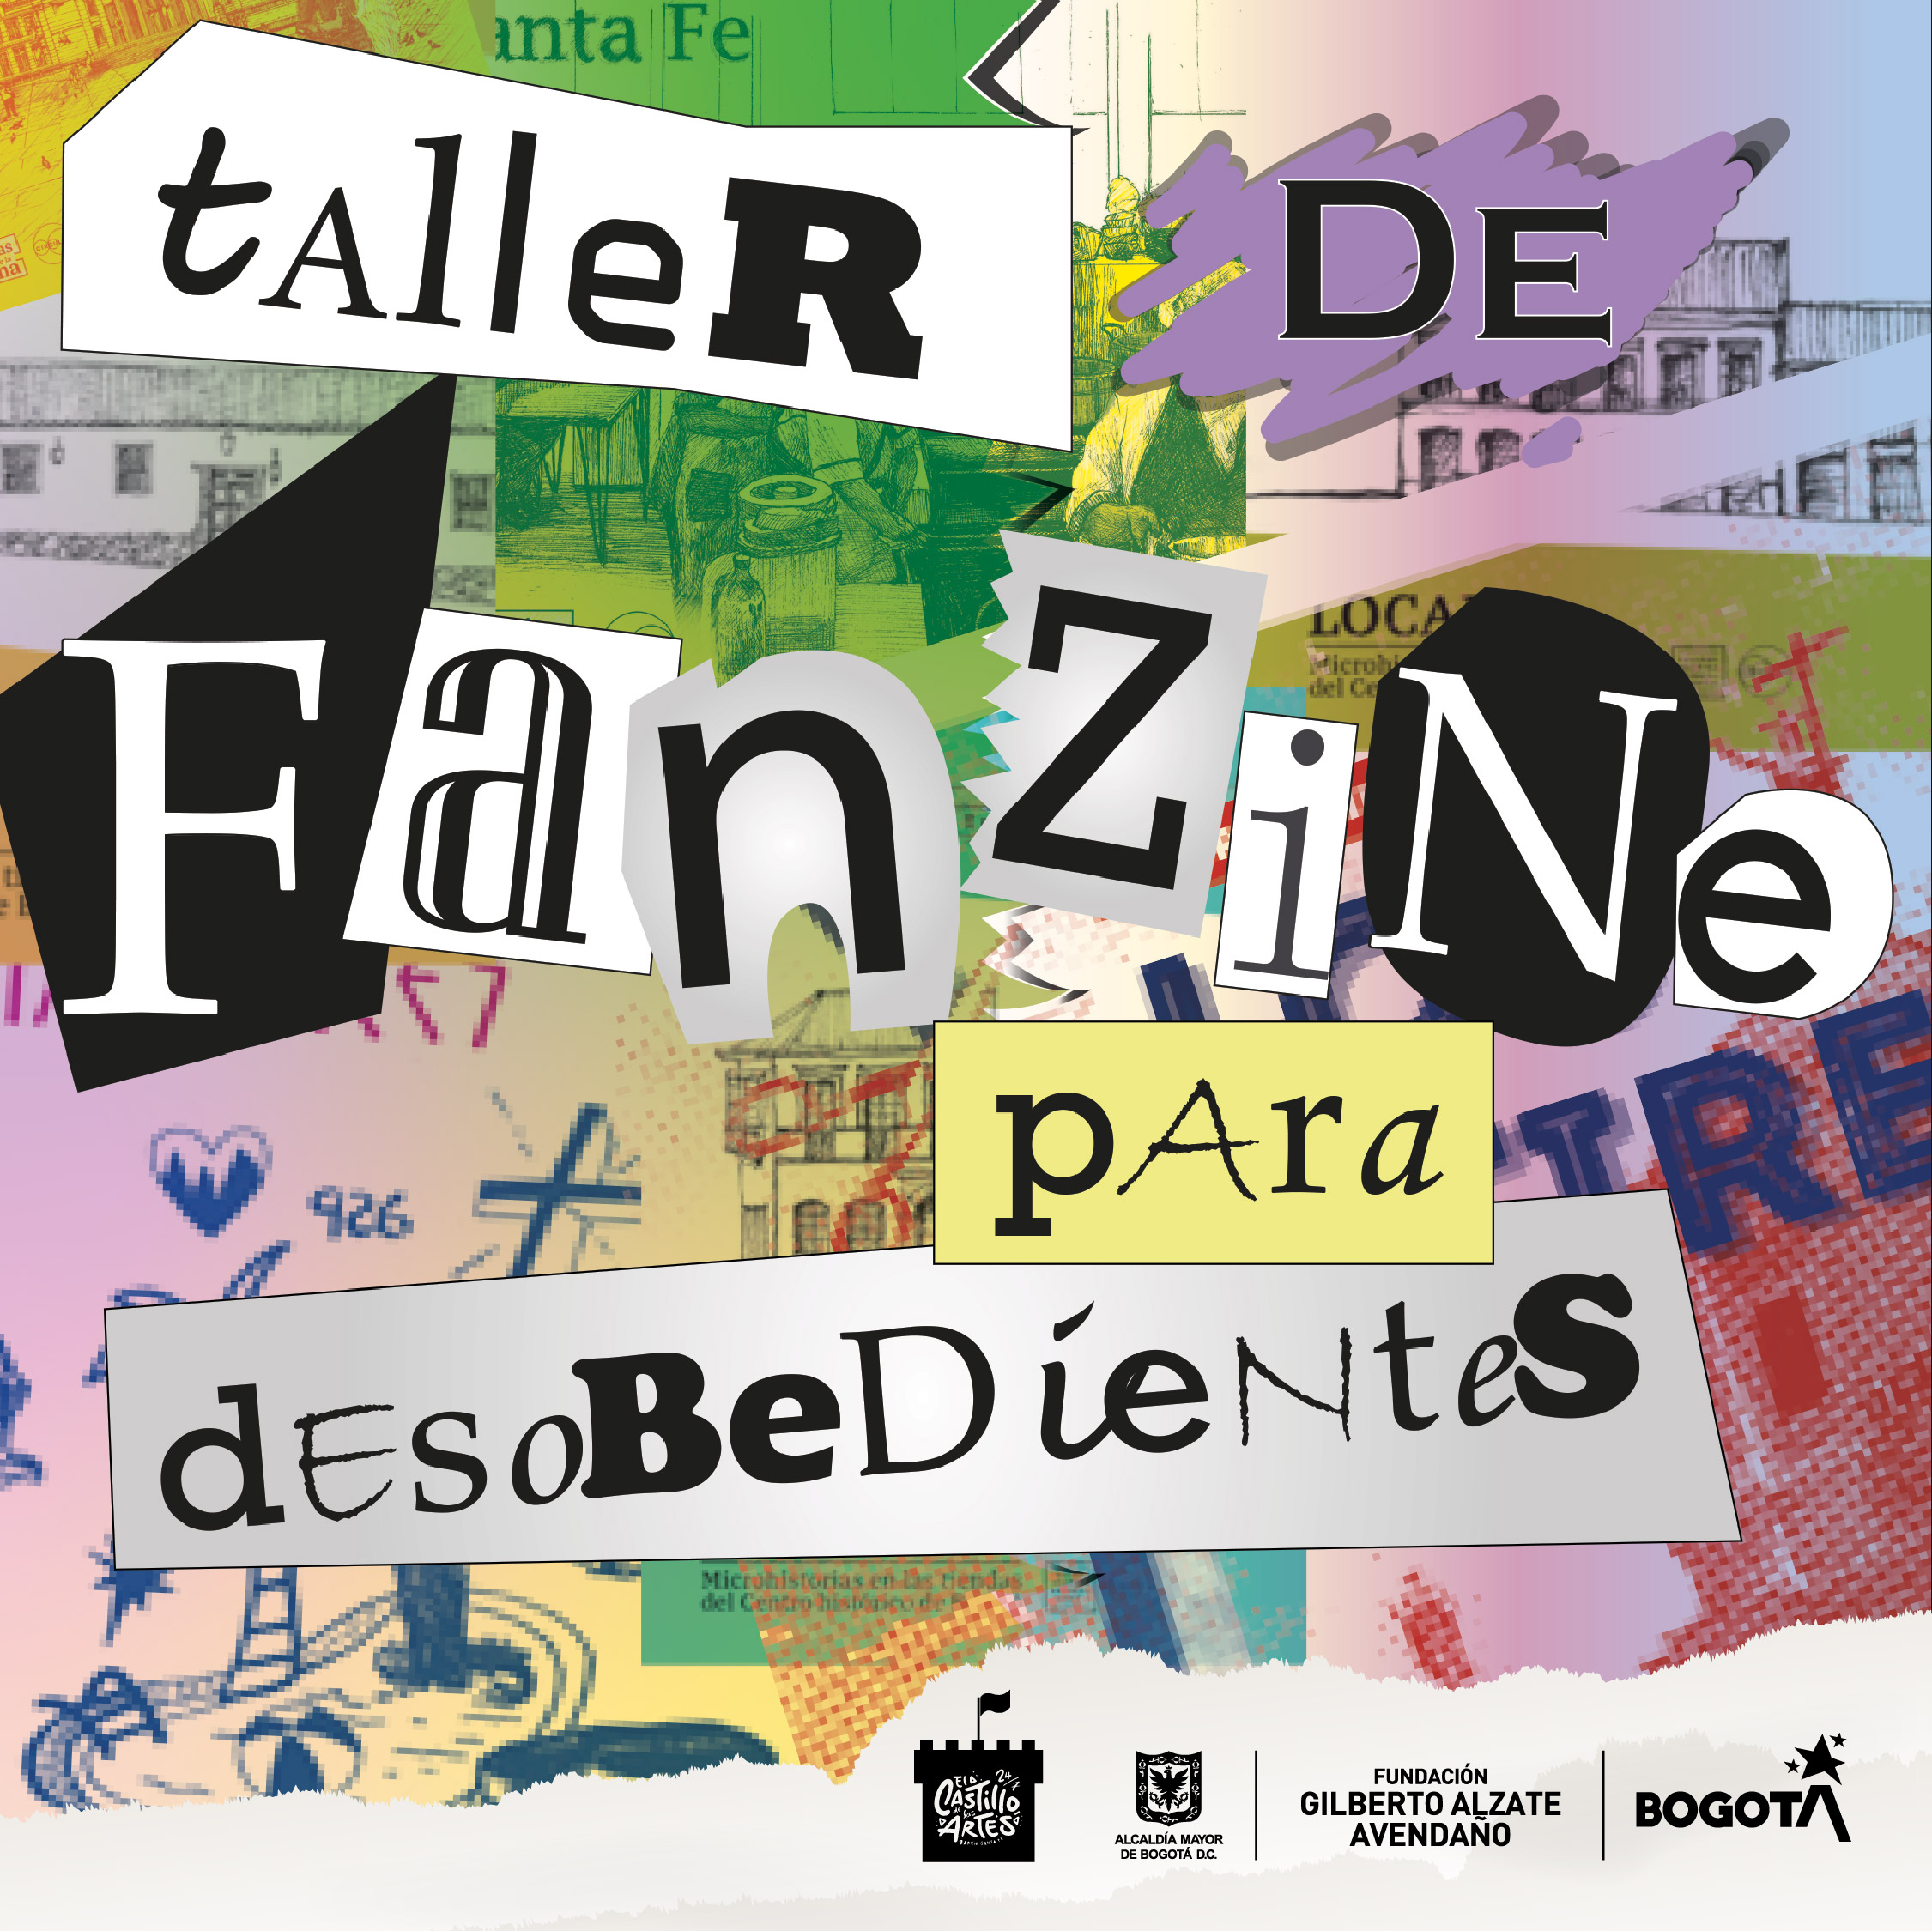 Taller Fanzine 17 de febrero